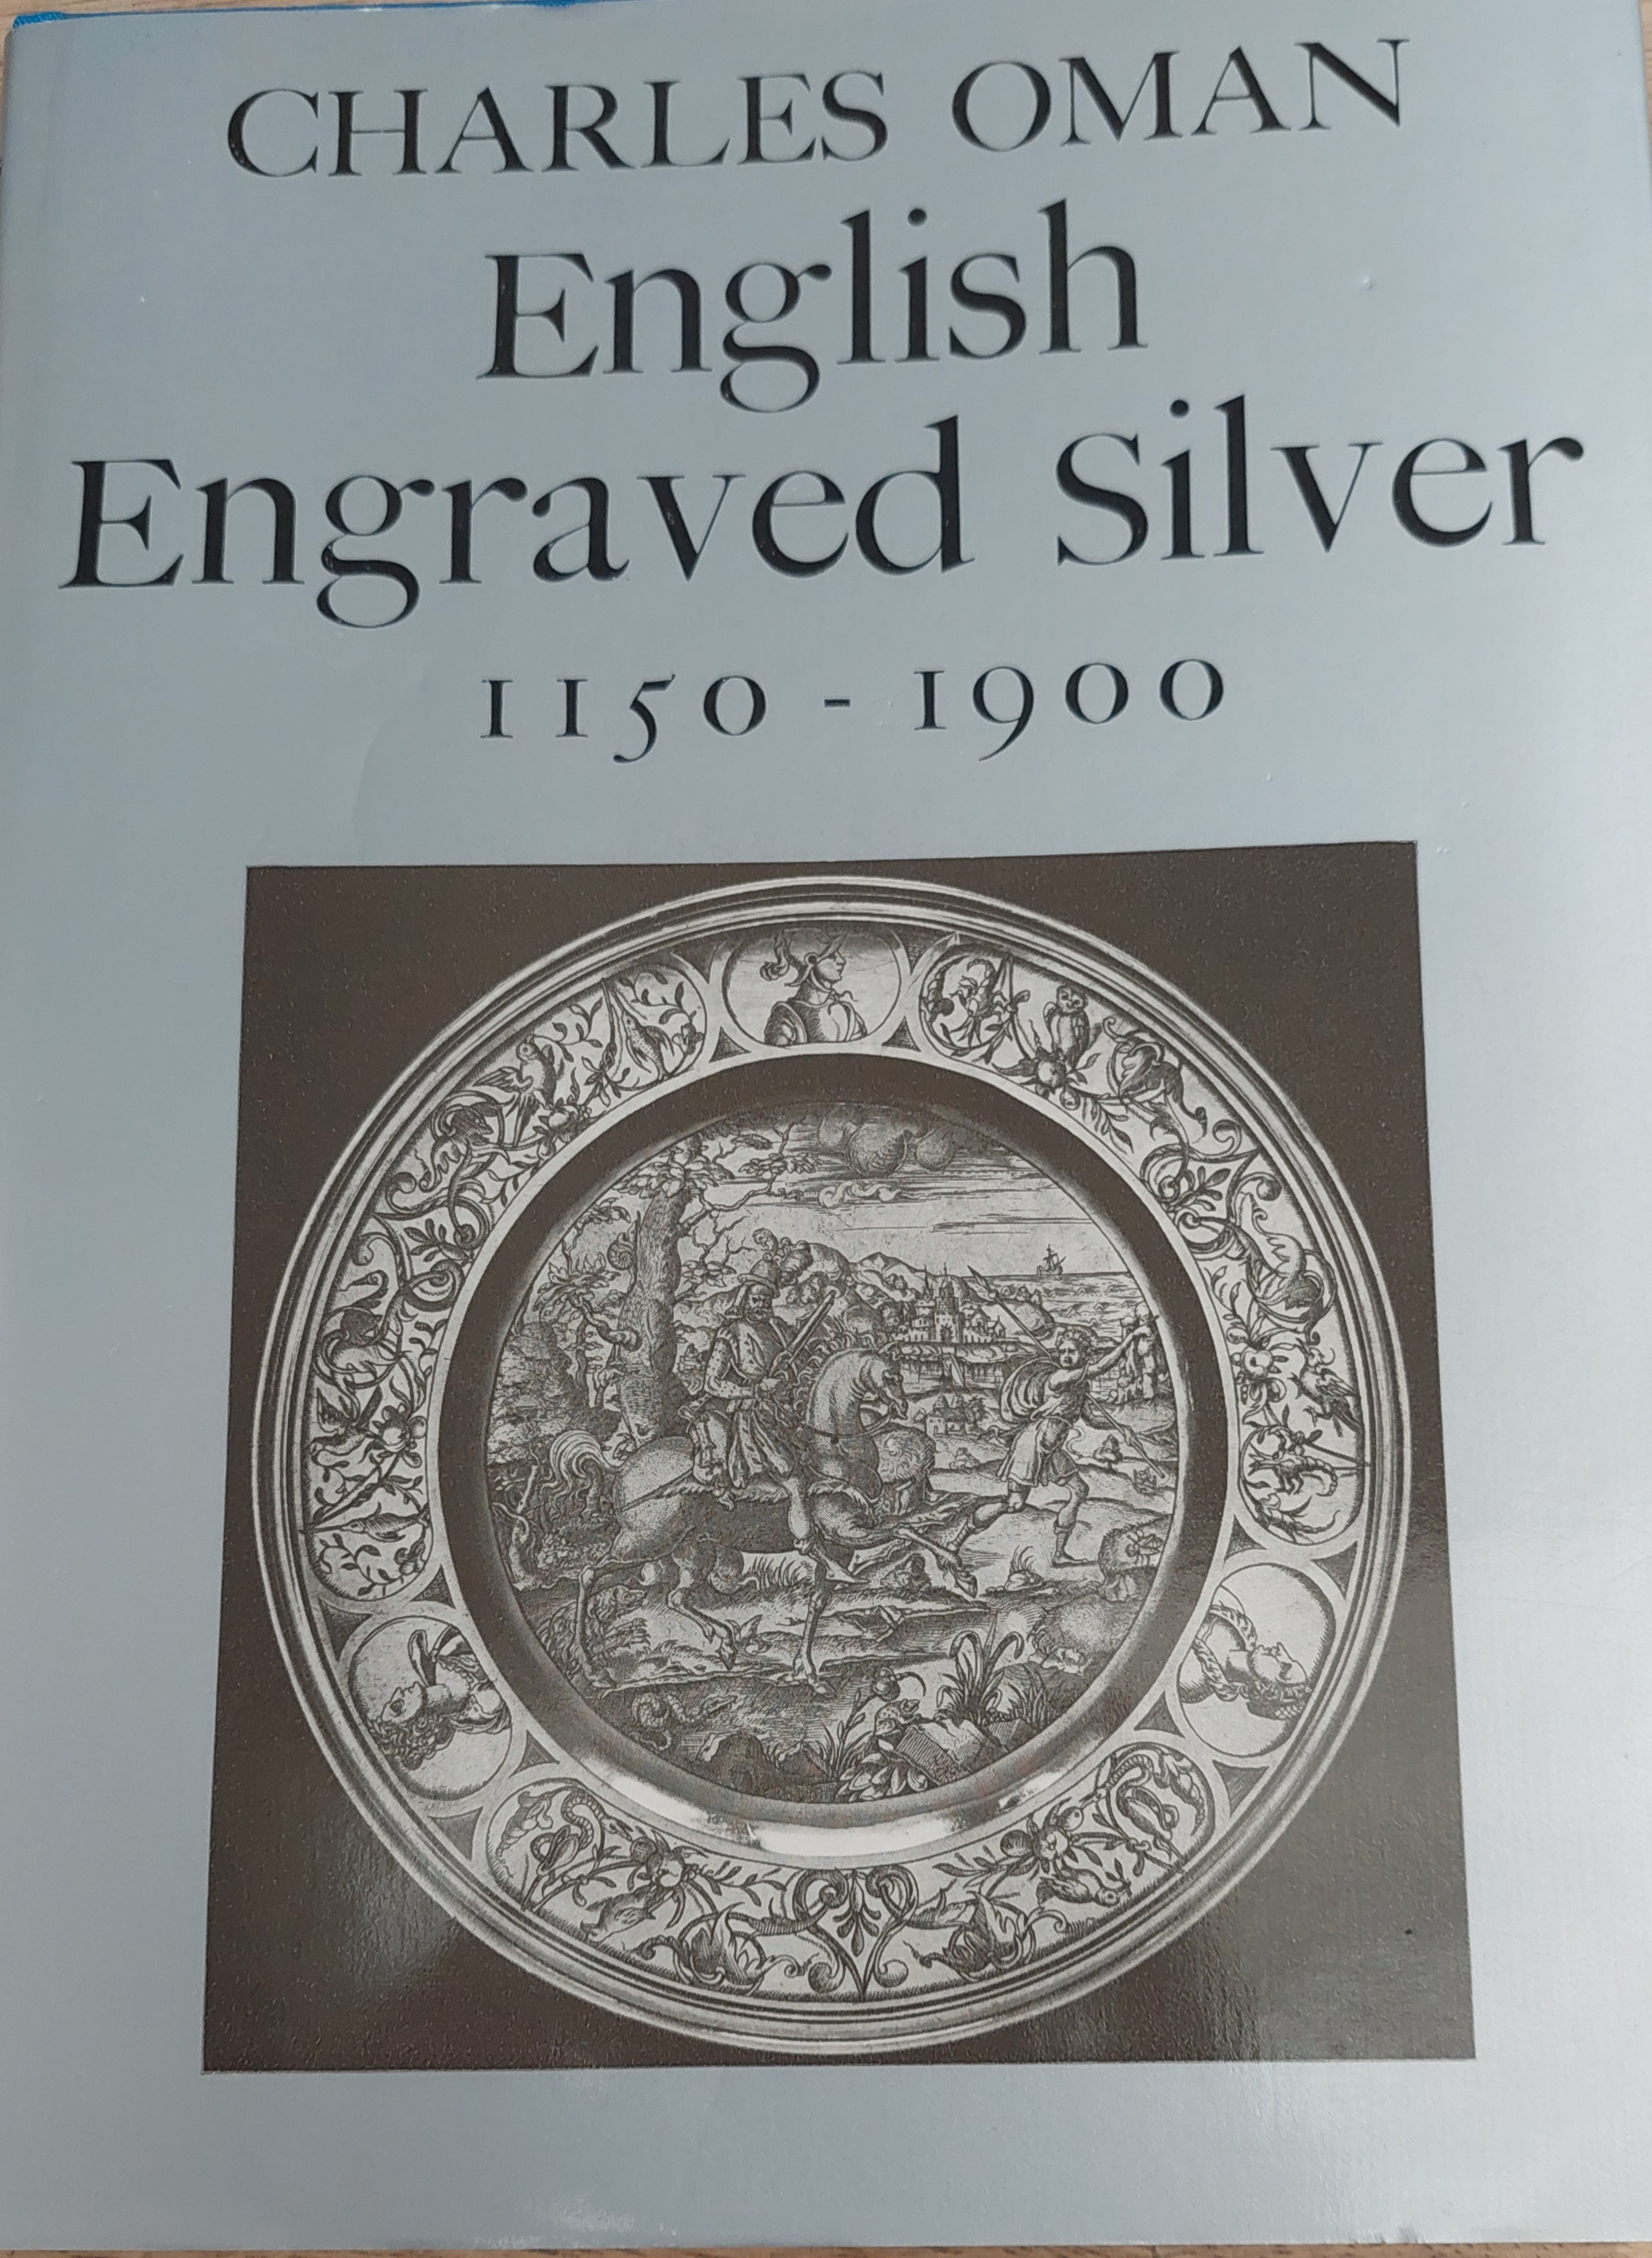 English Engraved Silver 1150-1900